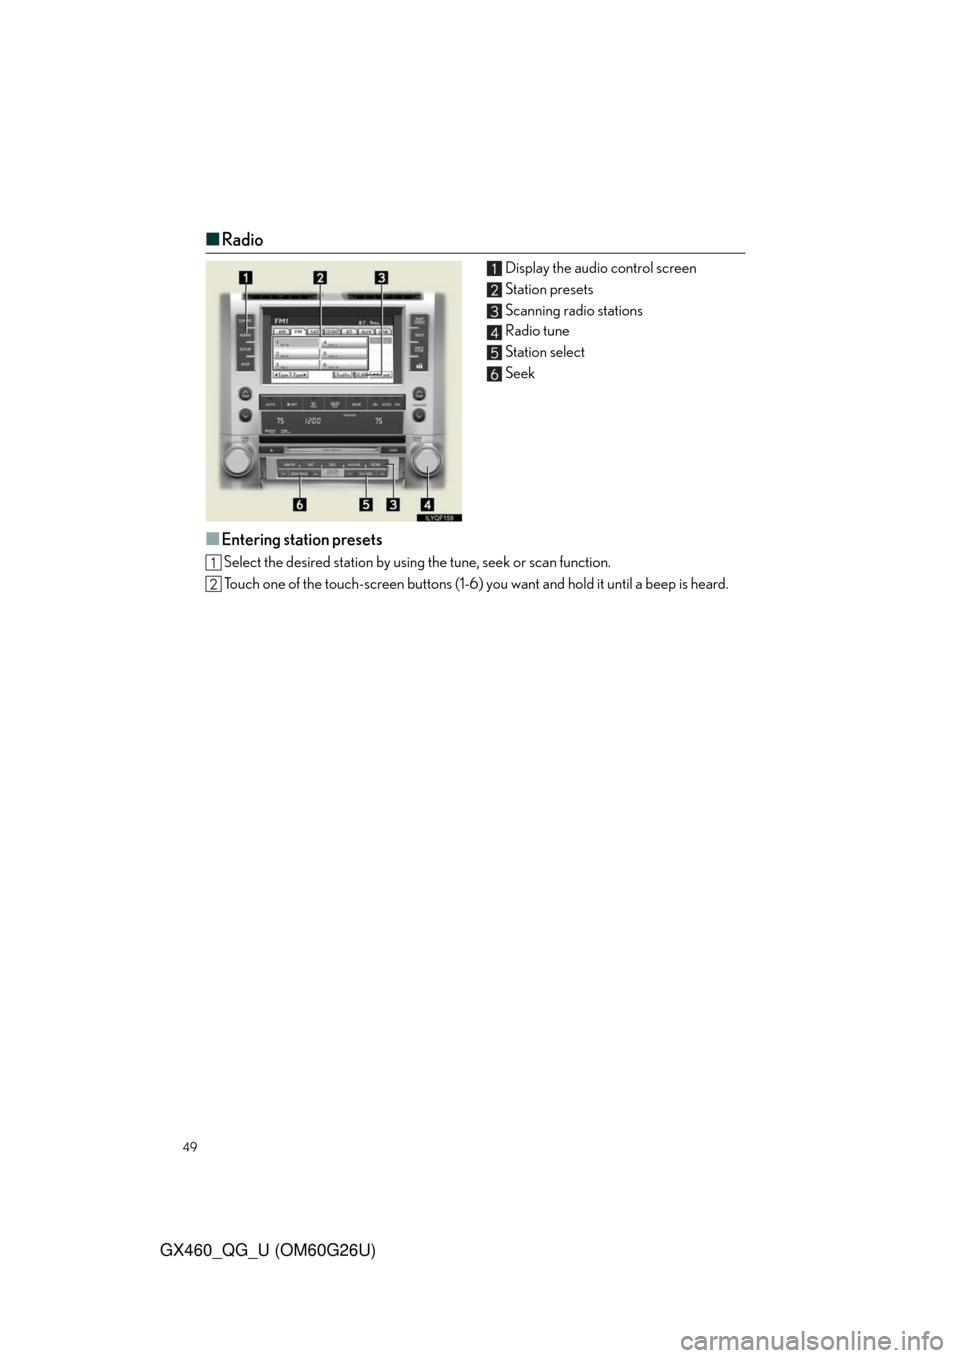 Lexus GX460 2011  Do-It-Yourself Maintenance / LEXUS 2011 GX460 OWNERS MANUAL QUICK GUIDE (OM60G26U) 49
GX460_QG_U (OM60G26U)
■Radio
Display the audio control screen
Station presets
Scanning radio stations
Radio tune
Station select
Seek
■Entering station presets
Select the desired station by usin